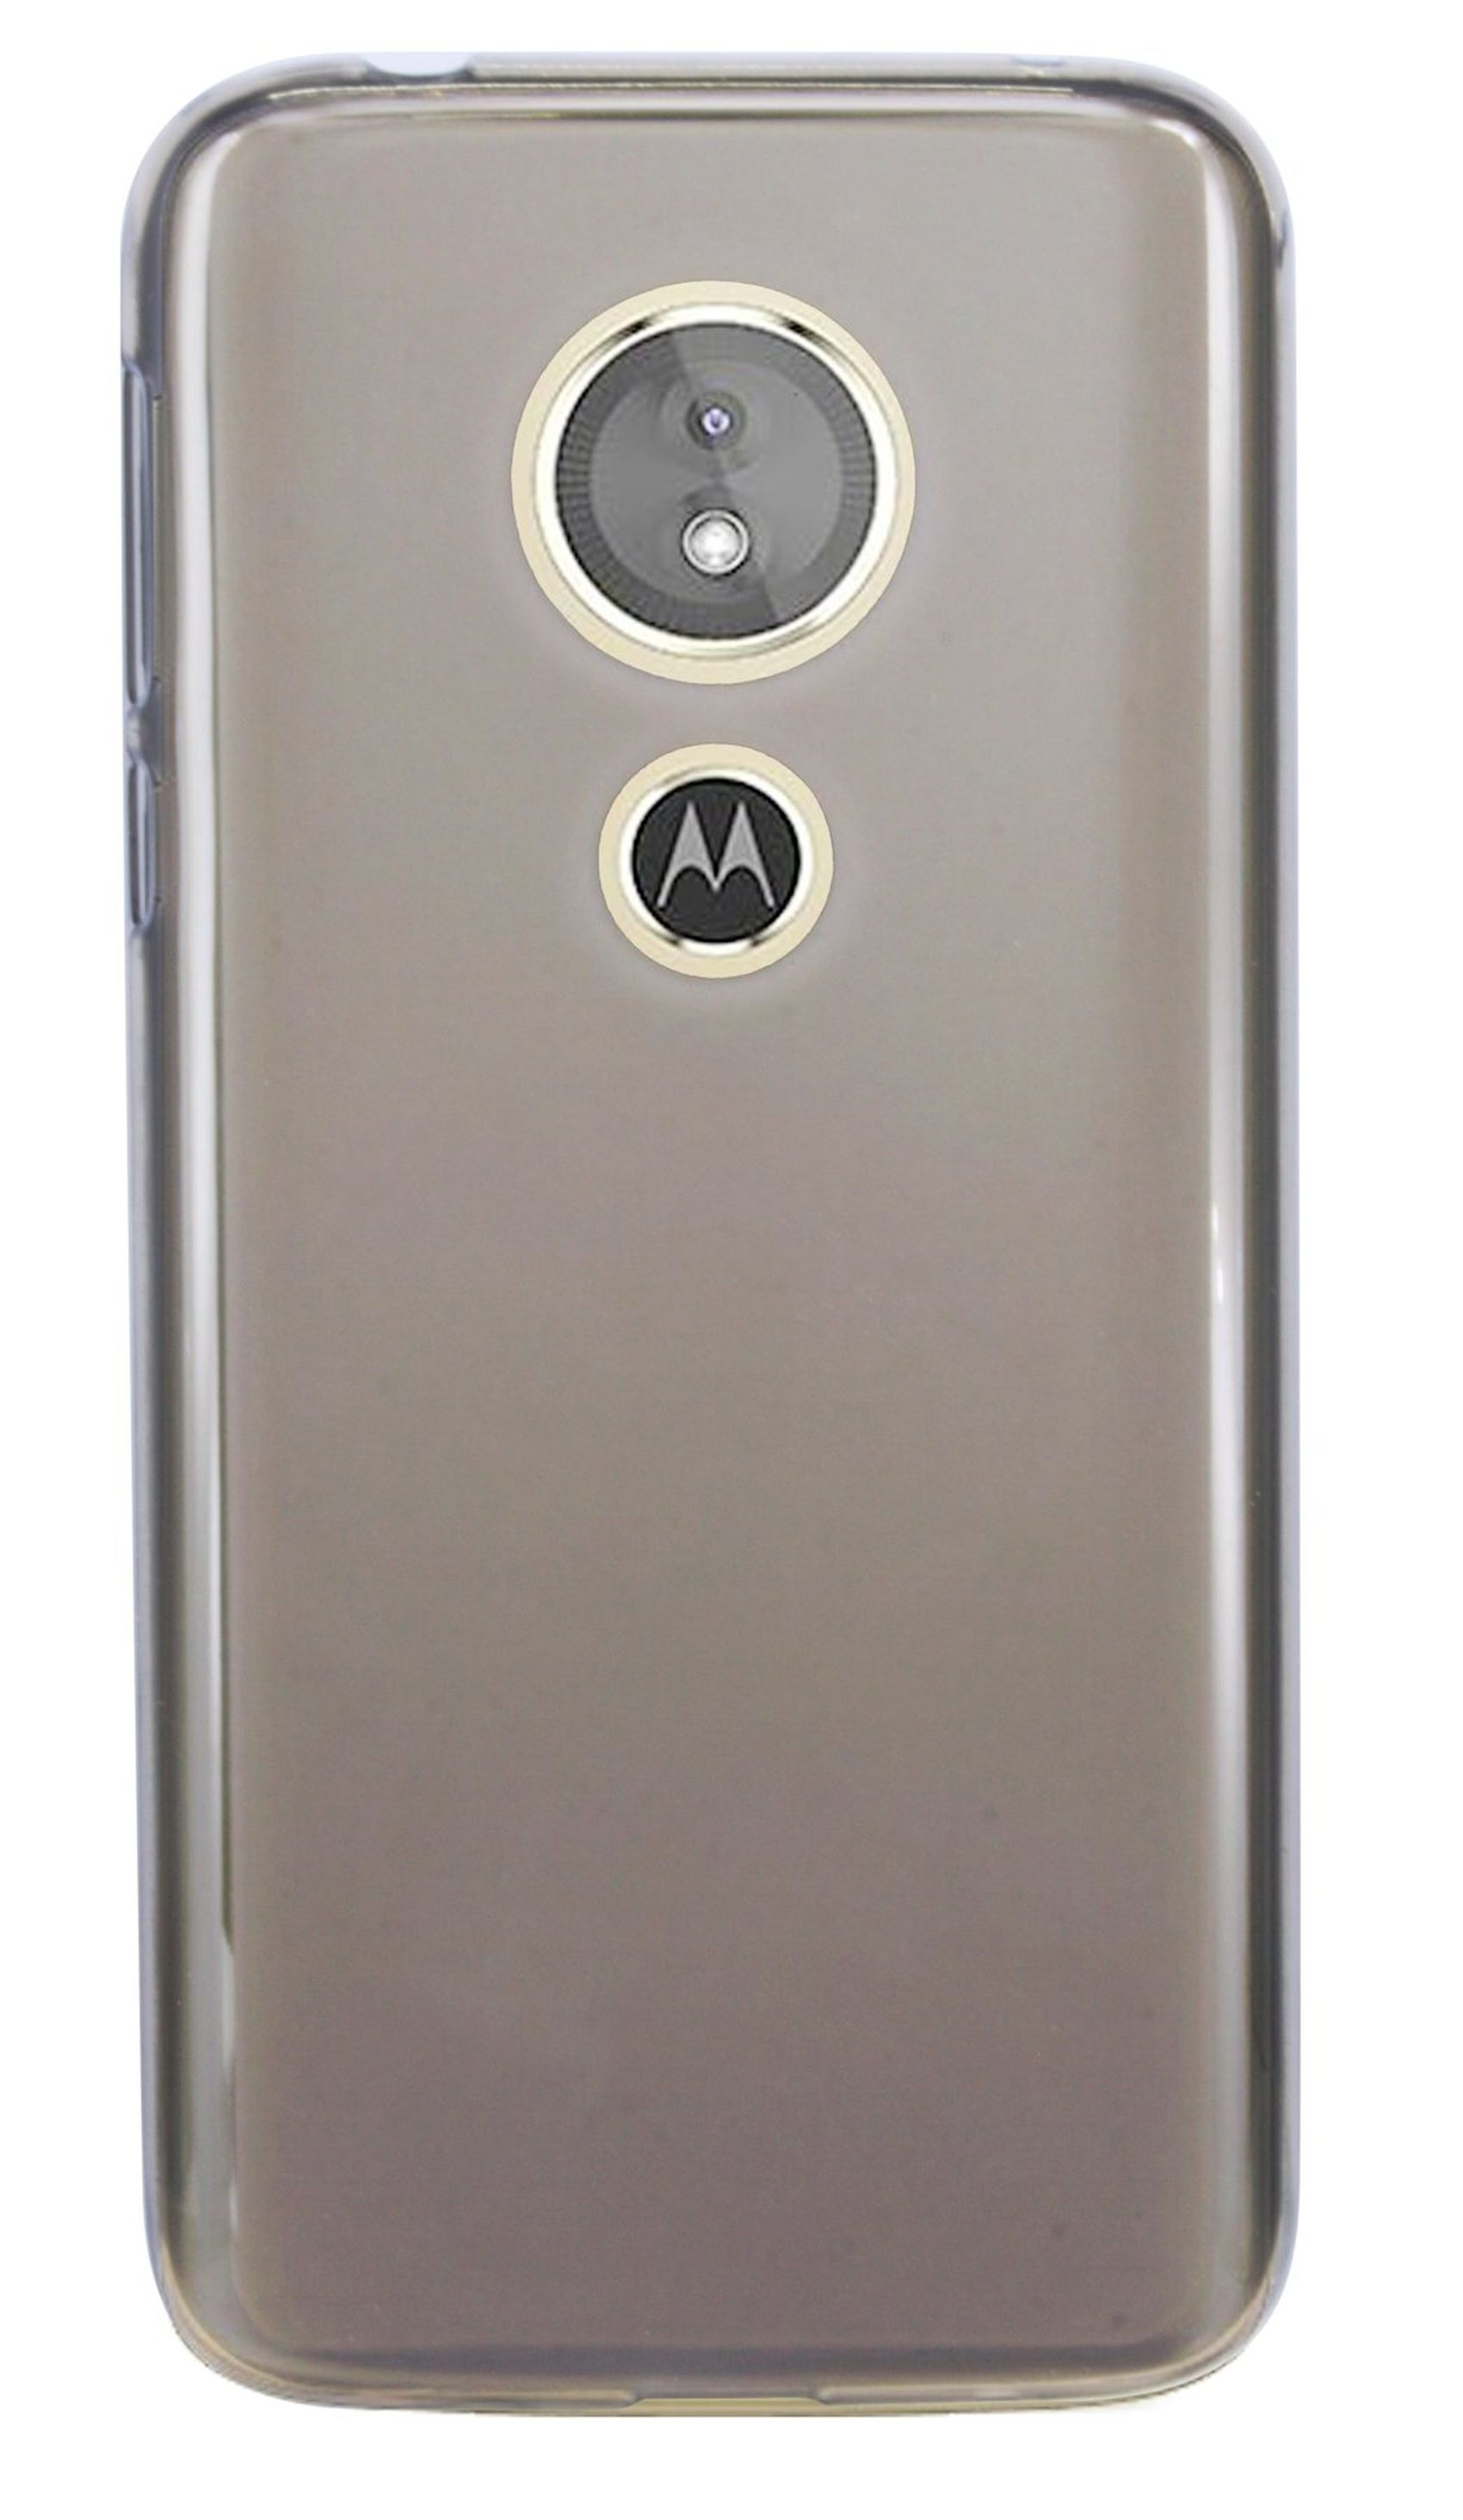 Tasche Schale Grau Motorola Gummi Zubehör Zubehör E5//Silikon Smoke, Bumper, COFI Moto in E5, Hülle Motorola, Case Schutzhülle Bumper Moto